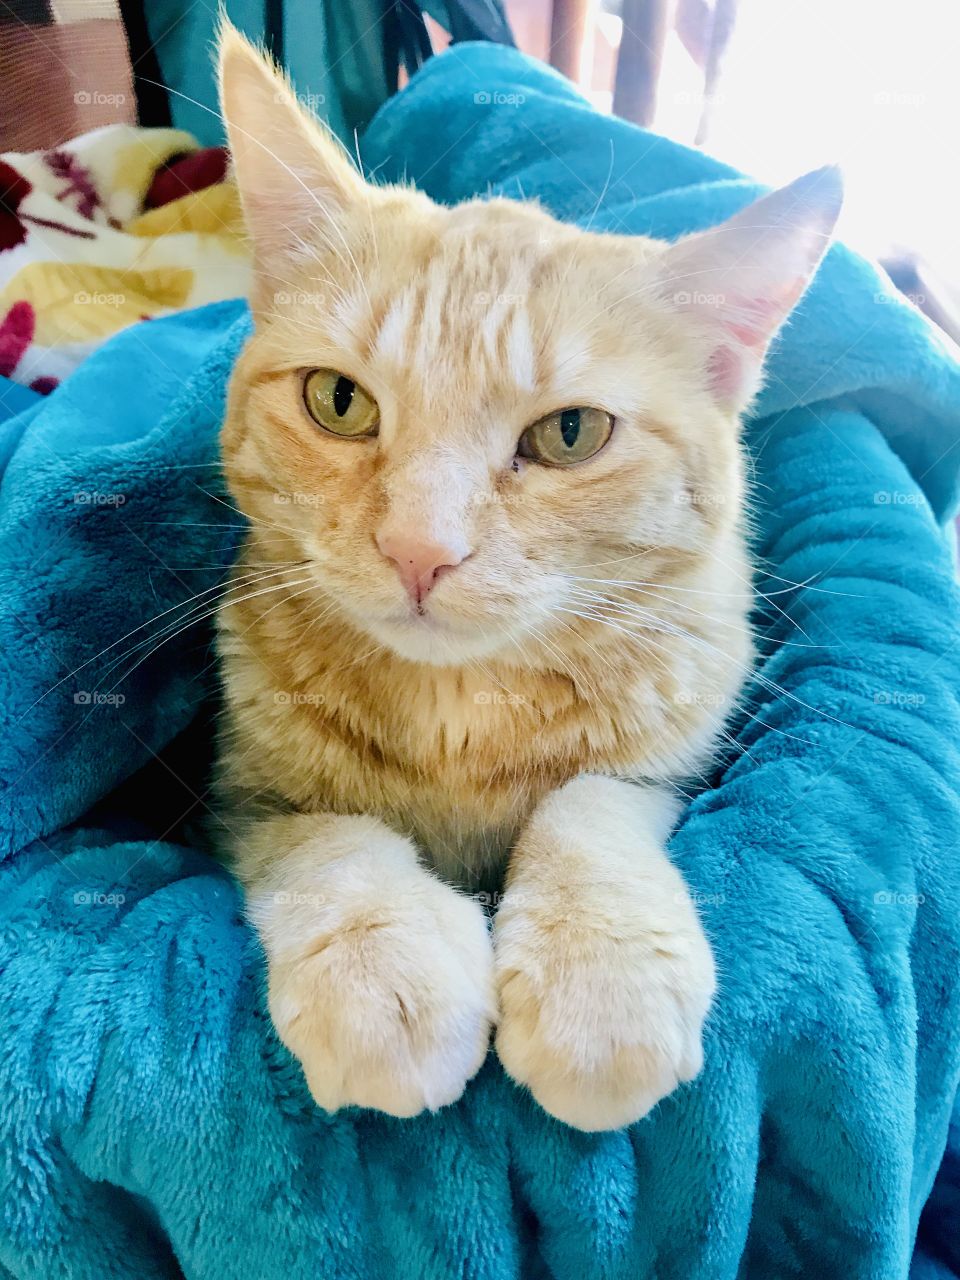 Darling orange tabby cat sitting all cuddled up in beautiful bright blue blanket!! 